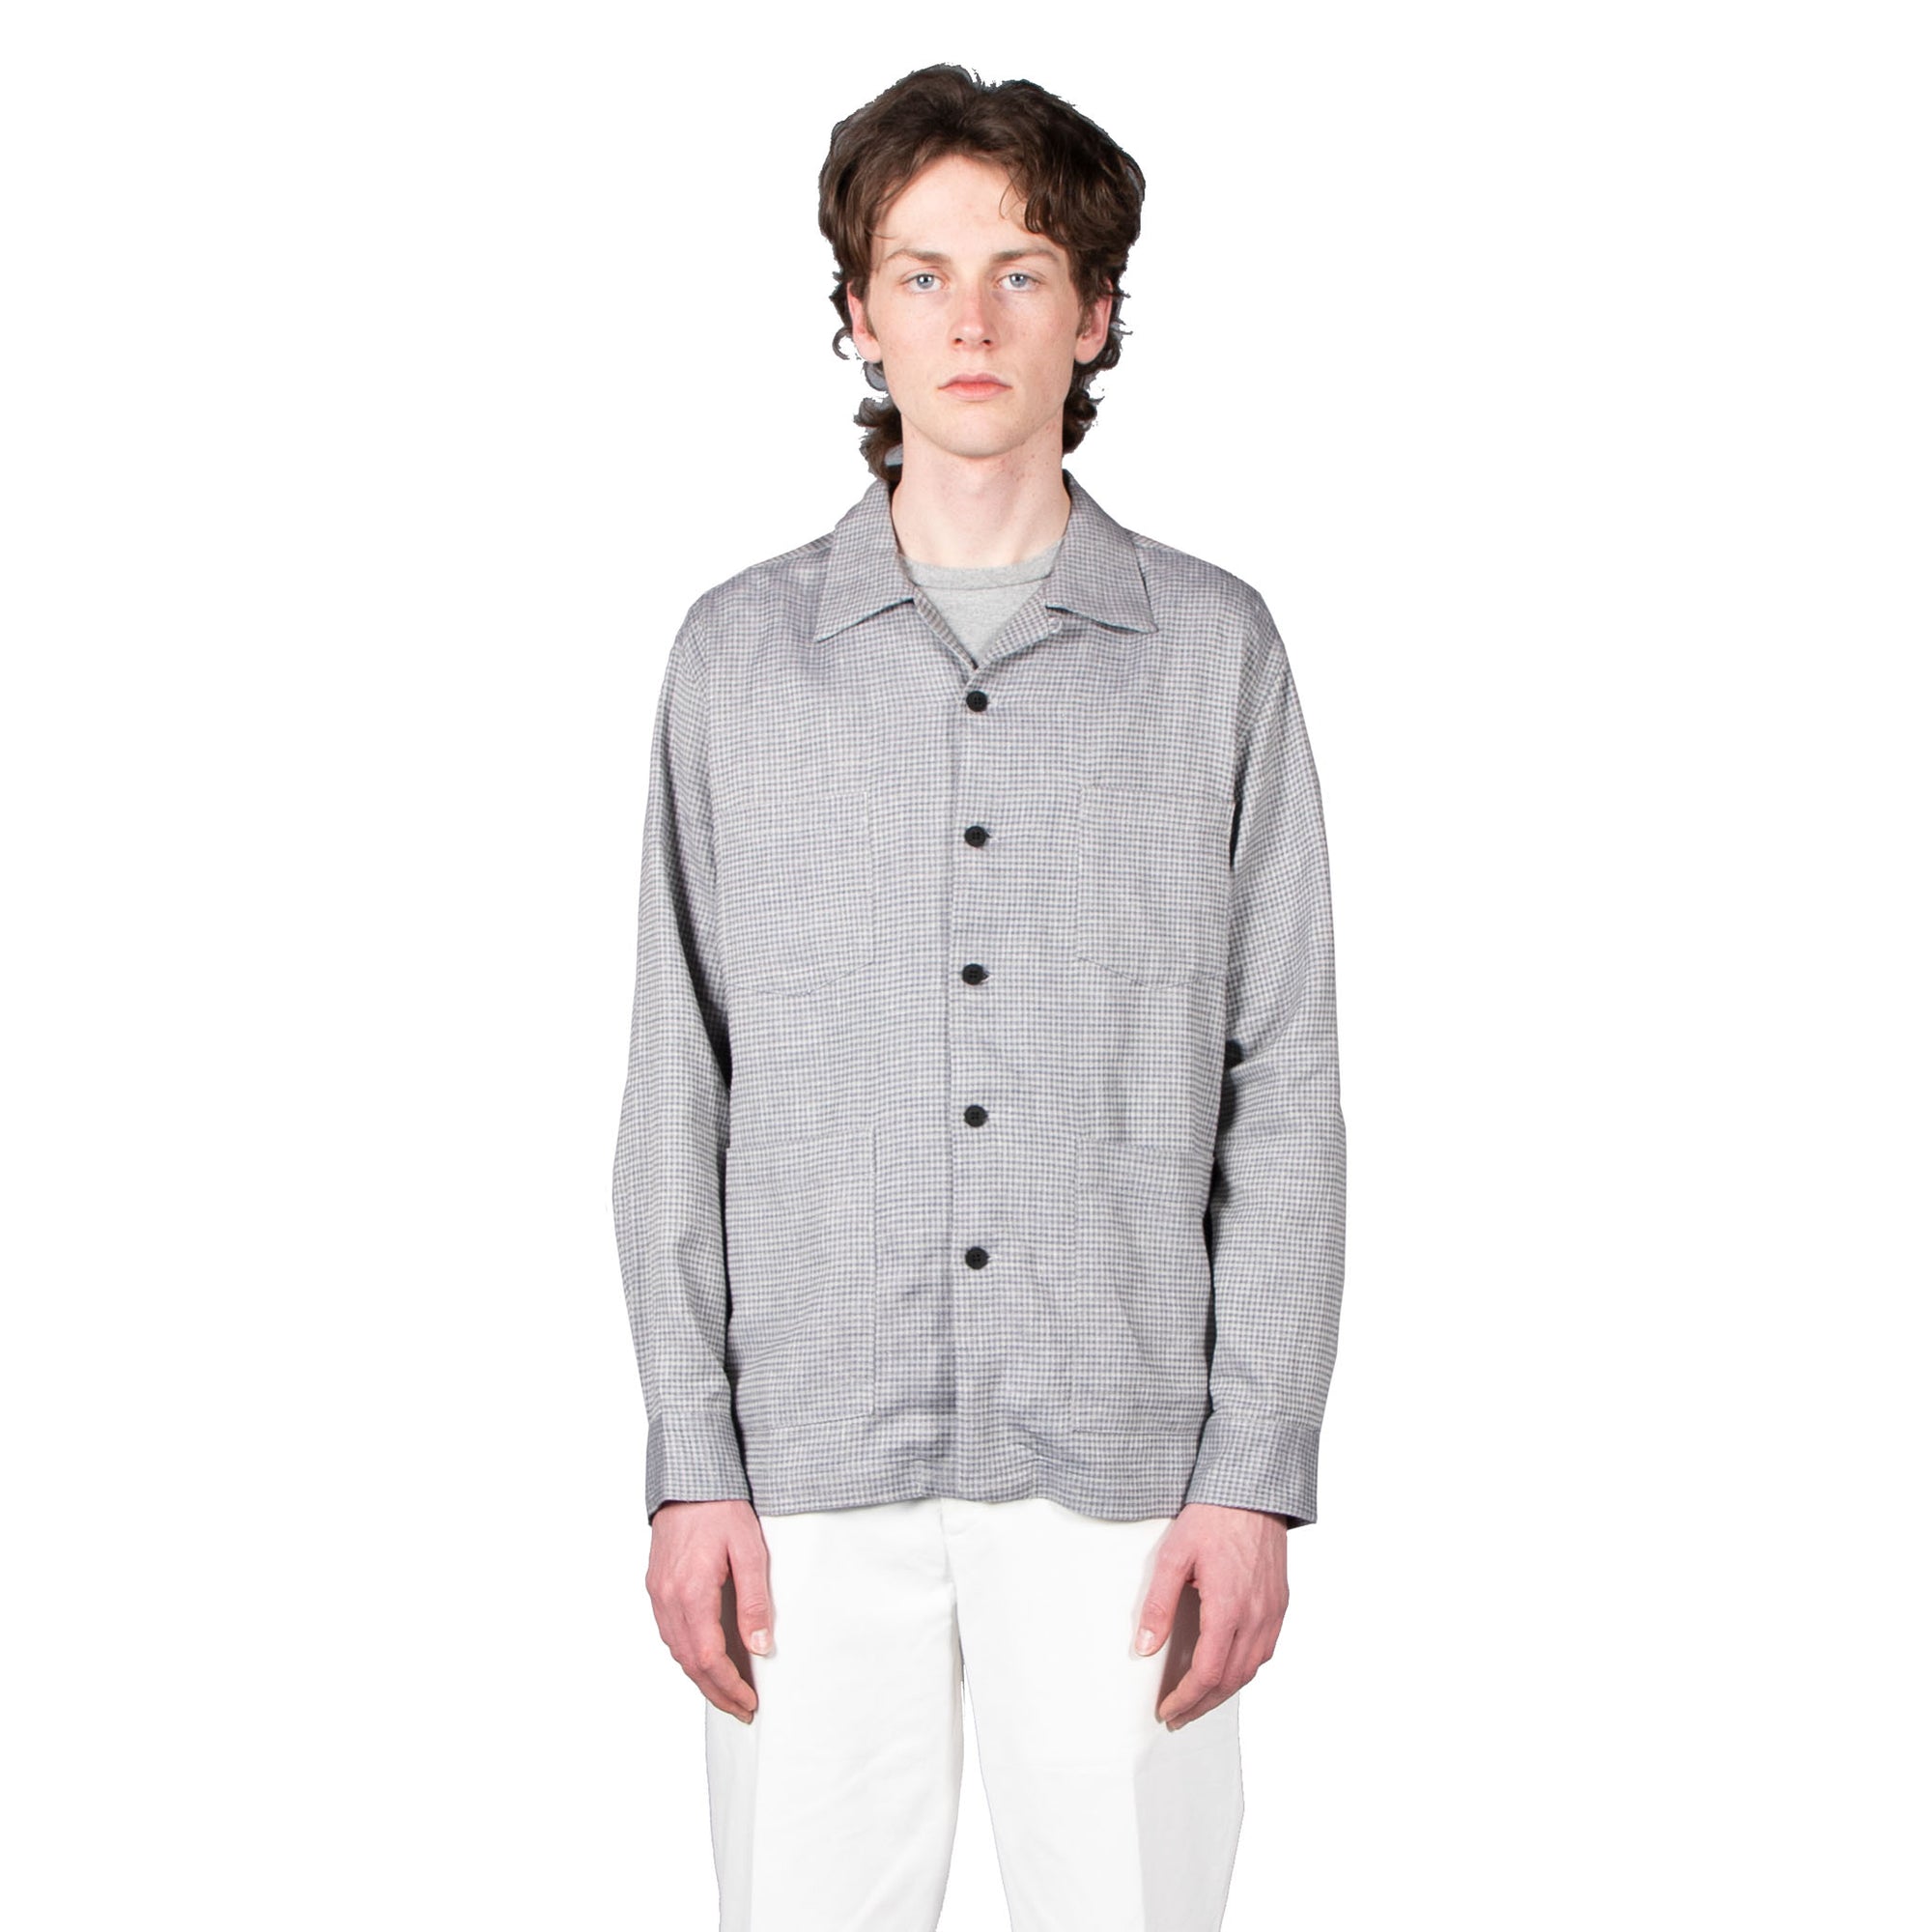 Shop Schnayderman's shirt online Overshirt boxy Melange check blue grey